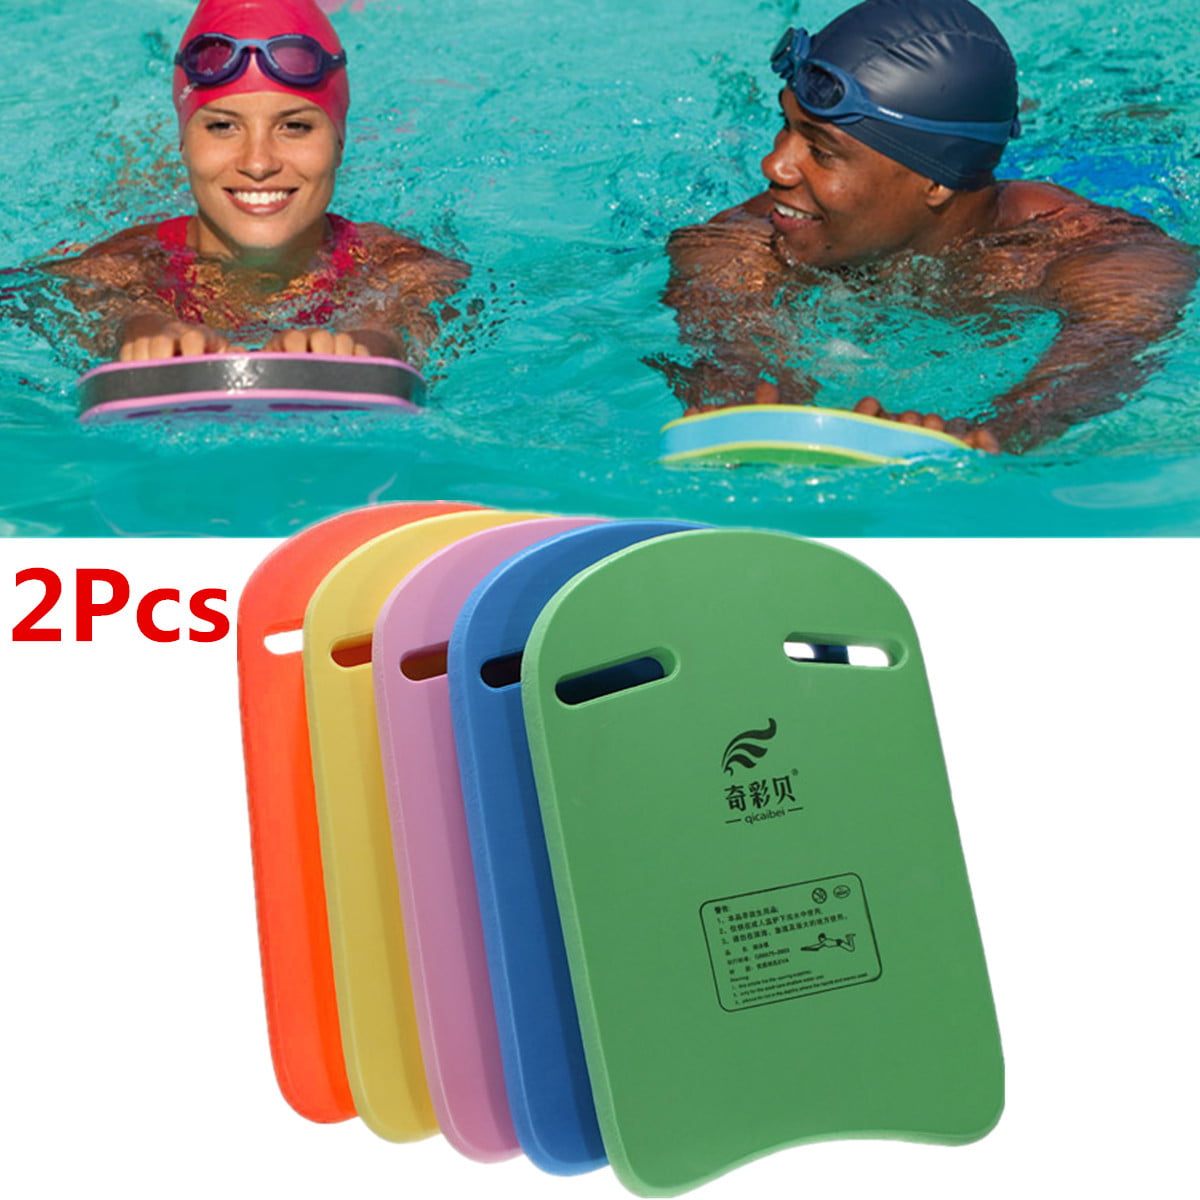 Hieefi Eva Waist Flutterboard Foam Back Floating Board with Adjustable Layers Swim Safety Float Board Tool Learning Pool Swim Safety Aid